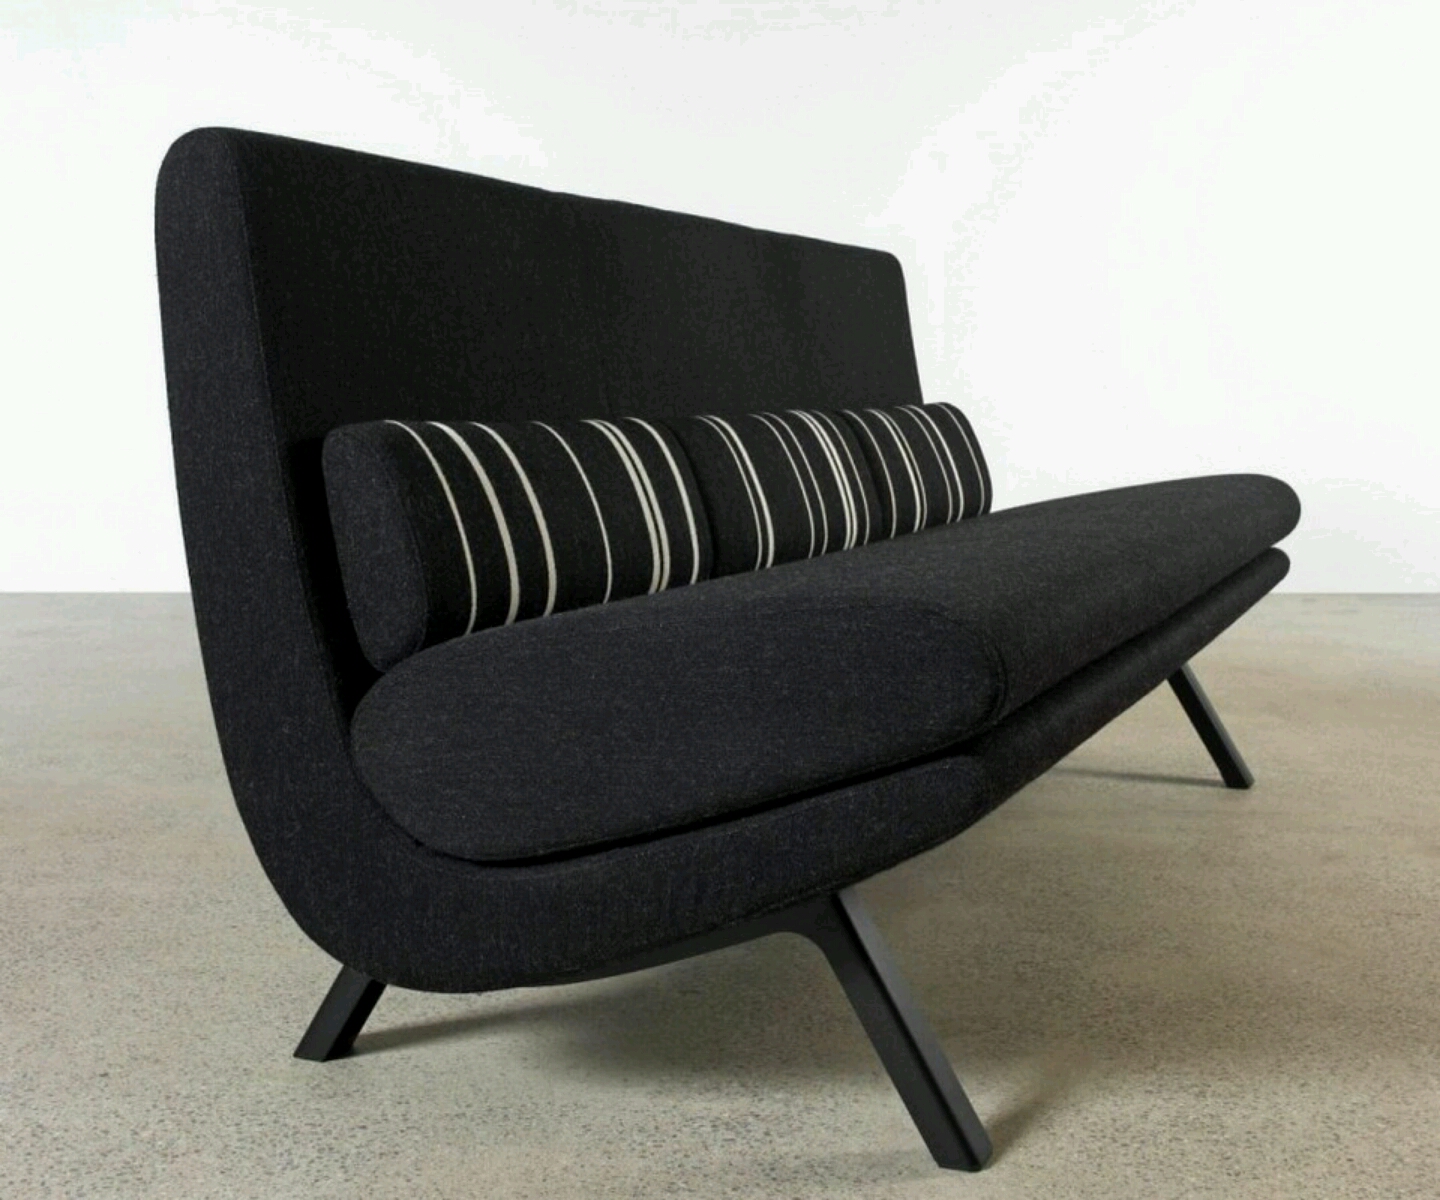 Modern Sofa Beautiful Designs Furniture Gallery